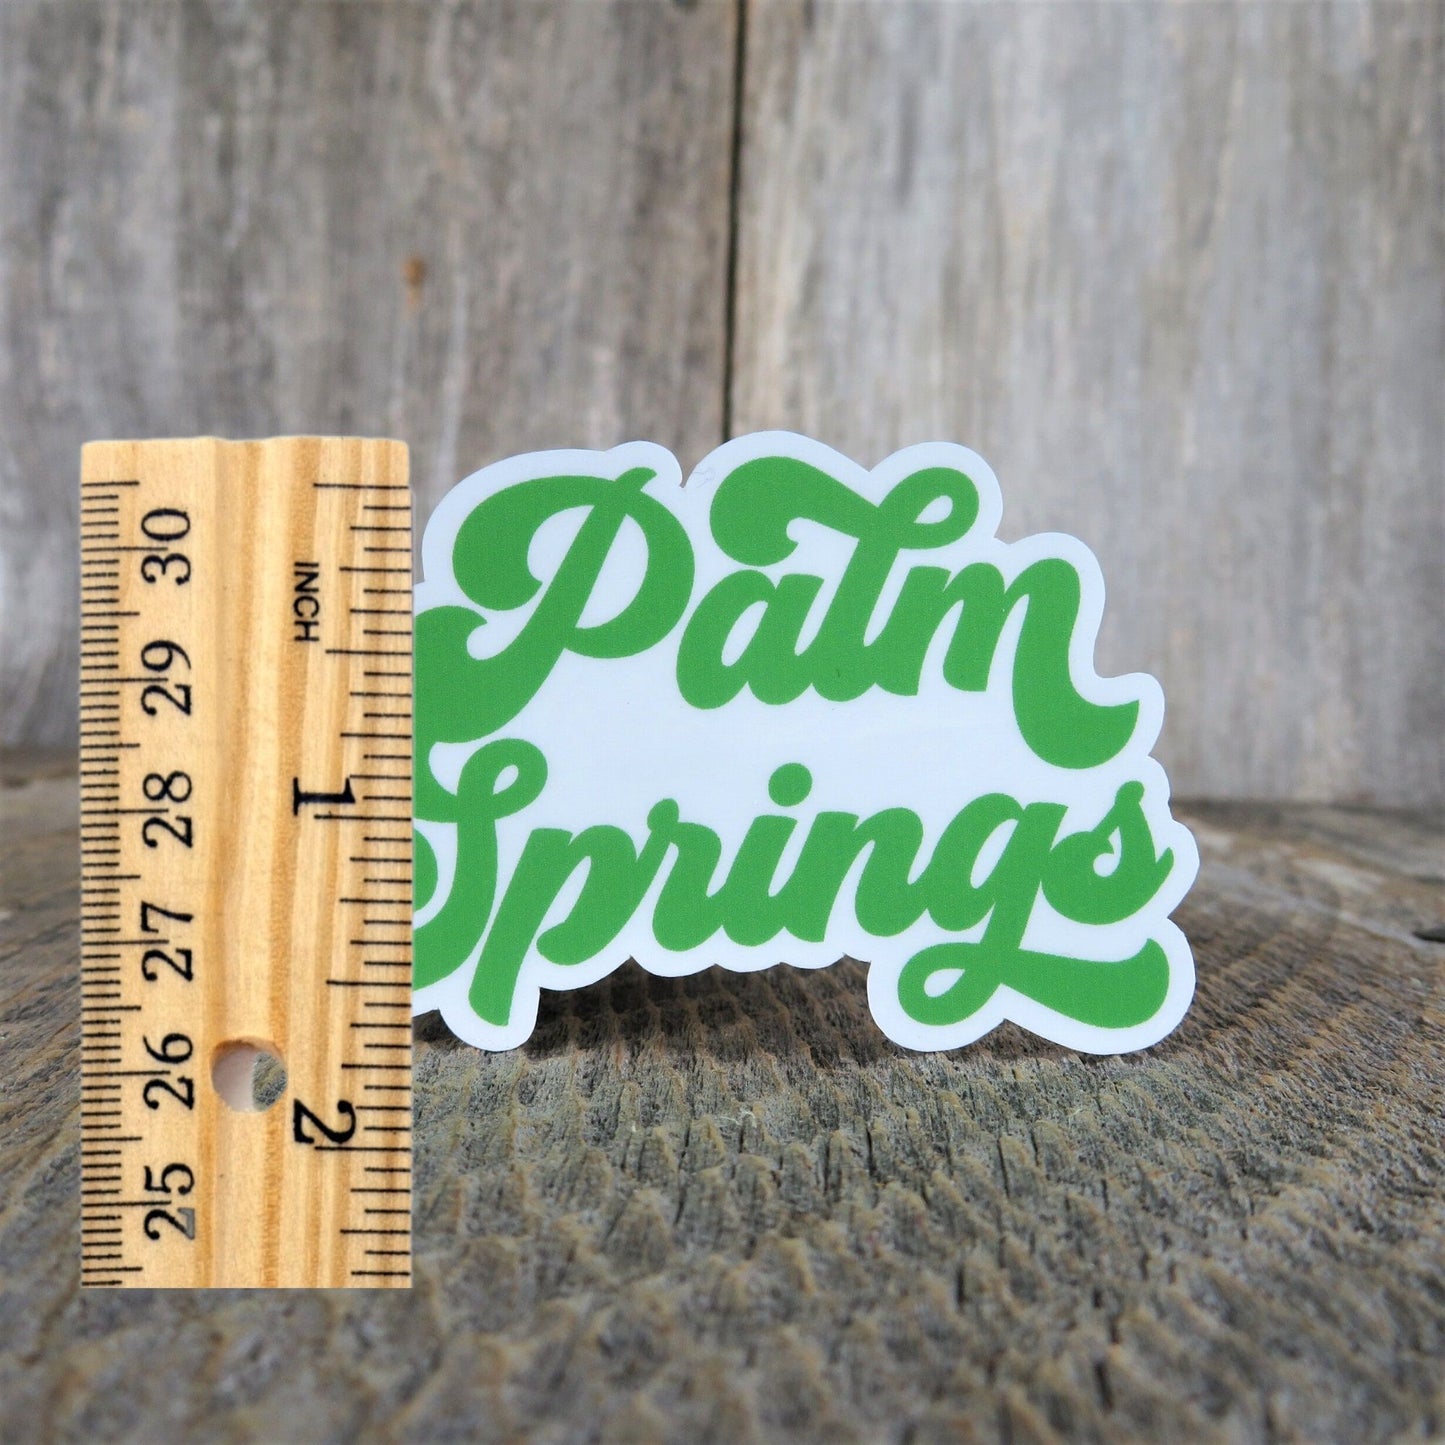 Palm Springs California Sticker Waterproof Green Retro Bubble Letters Destination Souvenir Travel Sticker